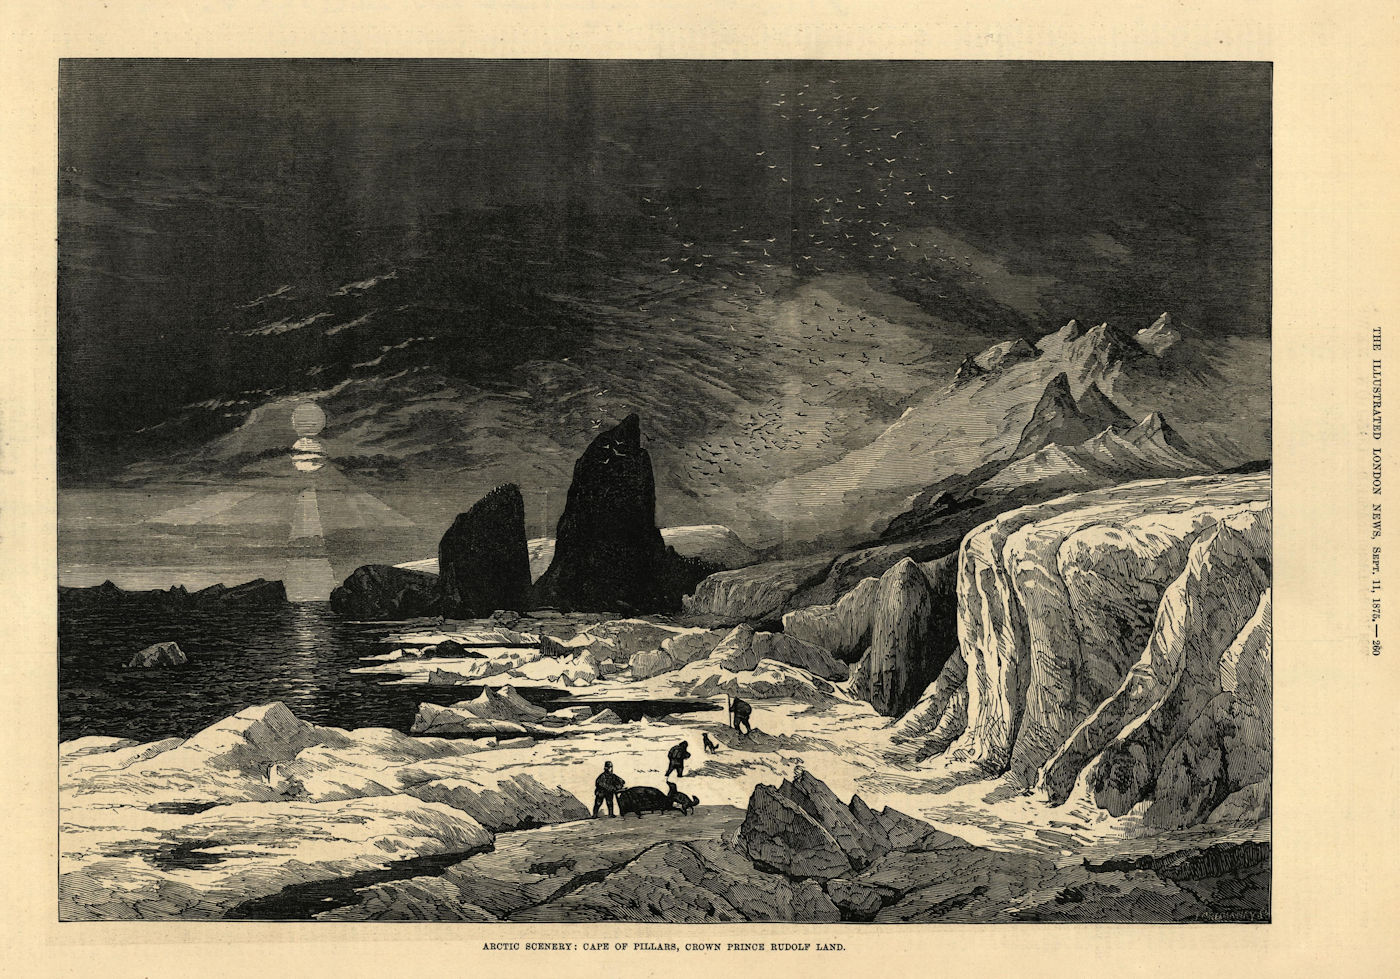 Arctic scenery: Cape of Pillars, Crown Prince Rudolf Land 1875 old print